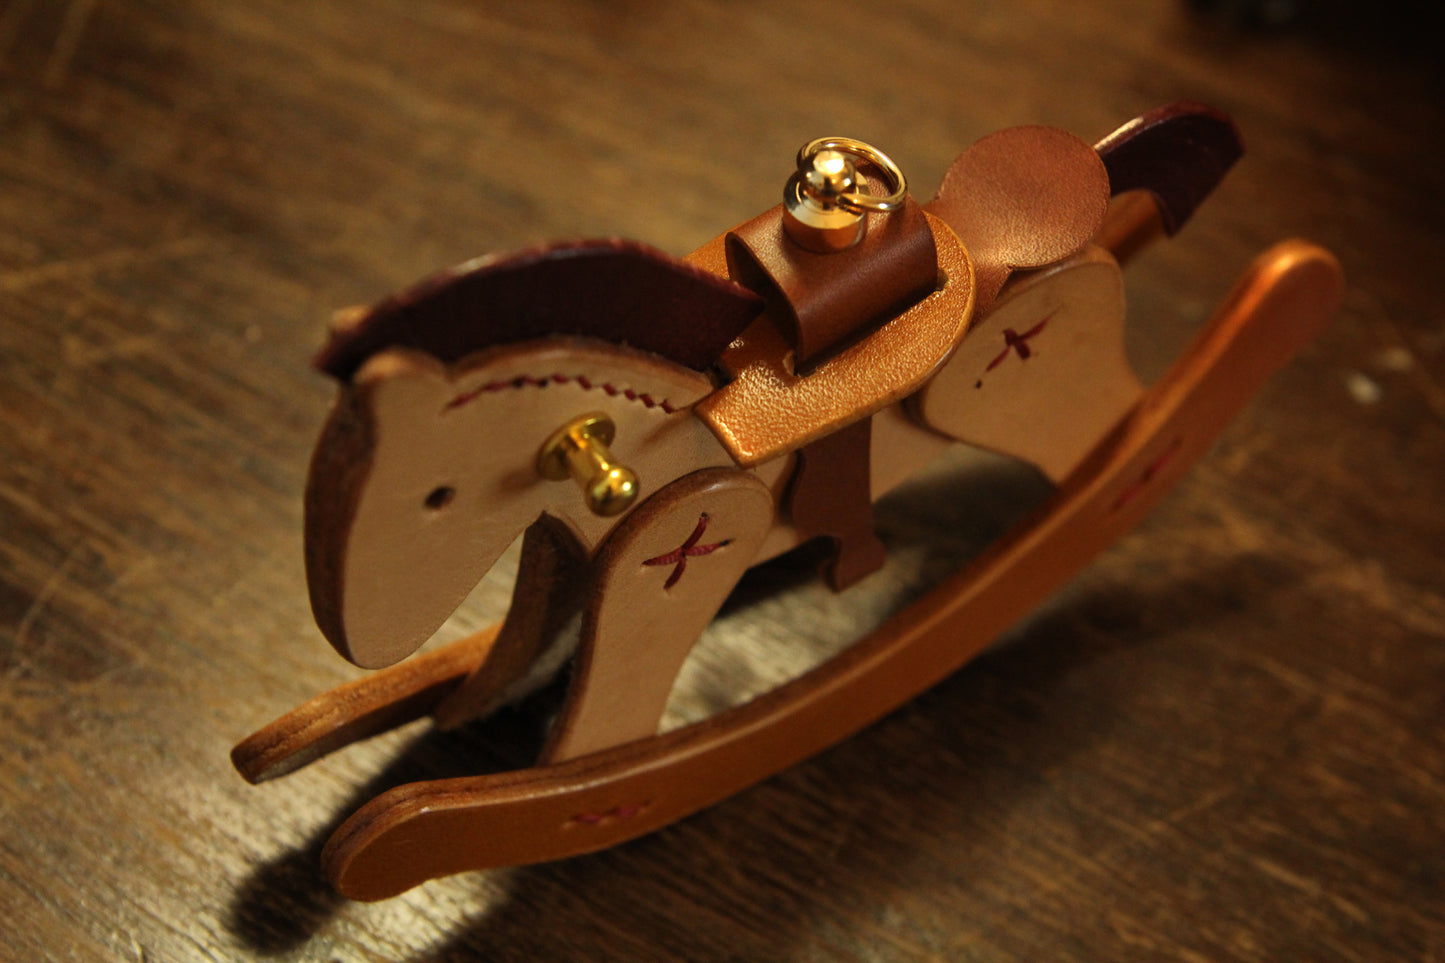 Handmade Leather Rocking Pony Ornament